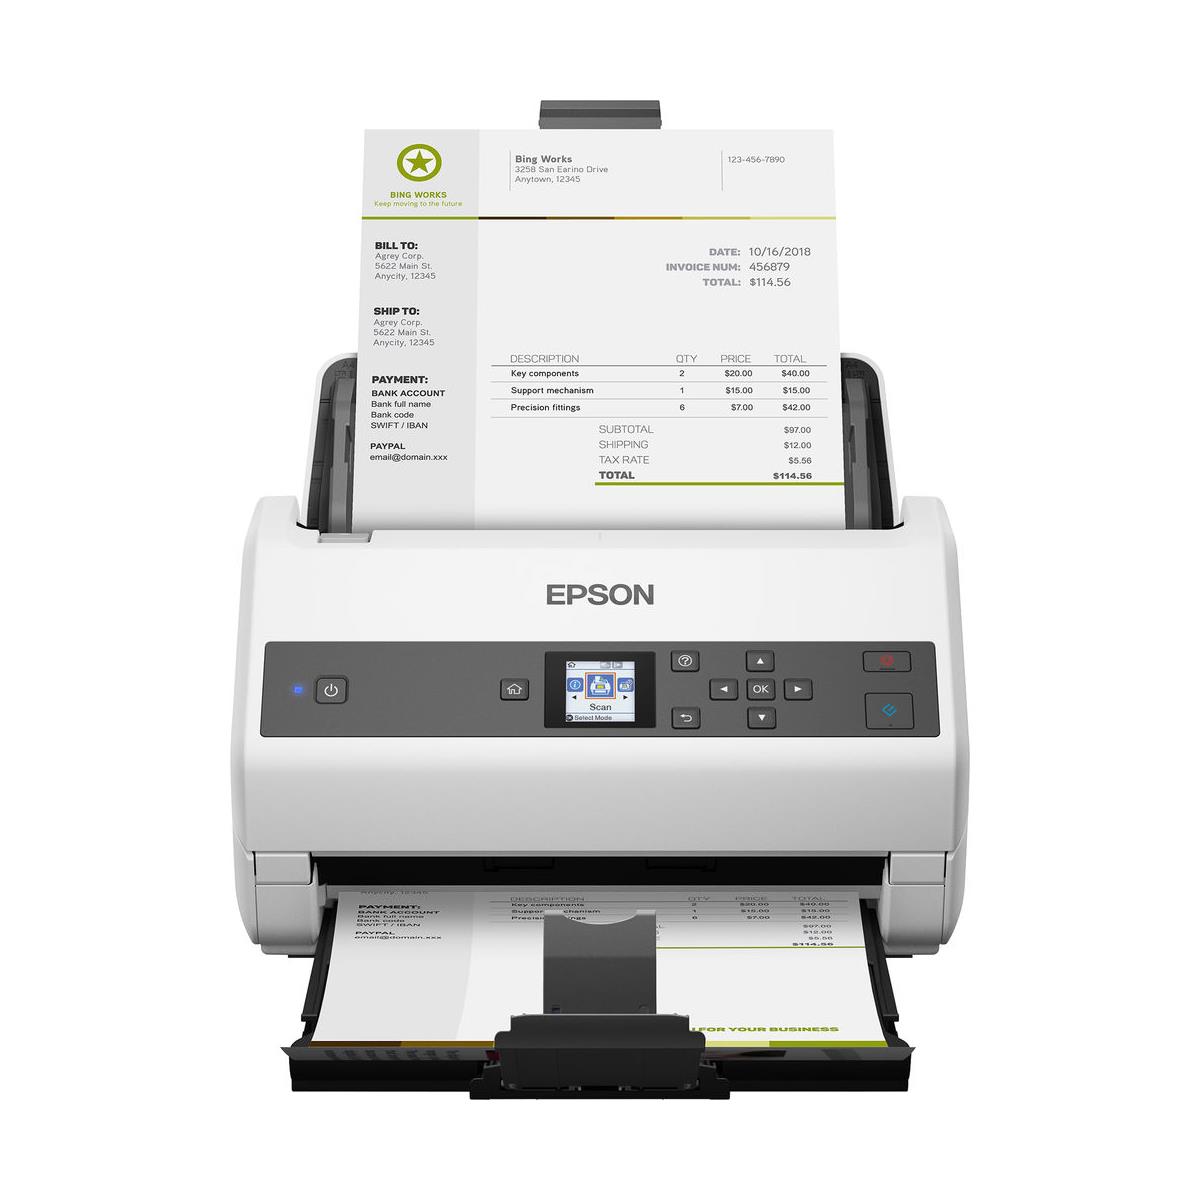 

Epson DS-870 Color Duplex Workgroup Document Scanner, 65 ppm/130 ipm